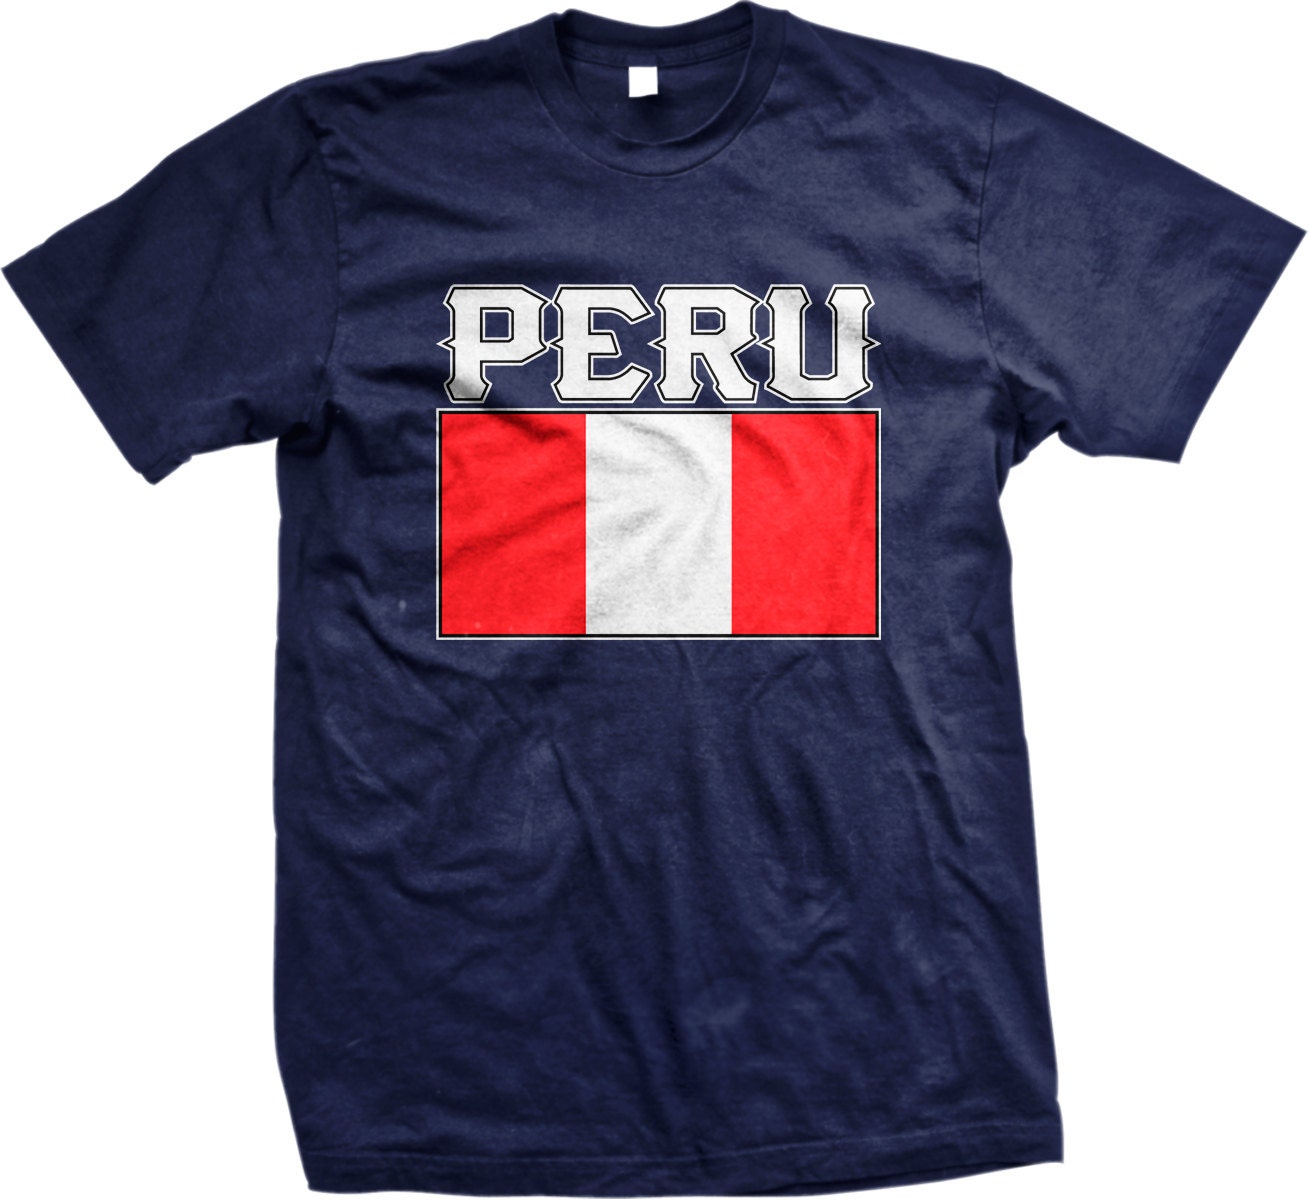 Peruvian La Blanquirroja iconic jerseys